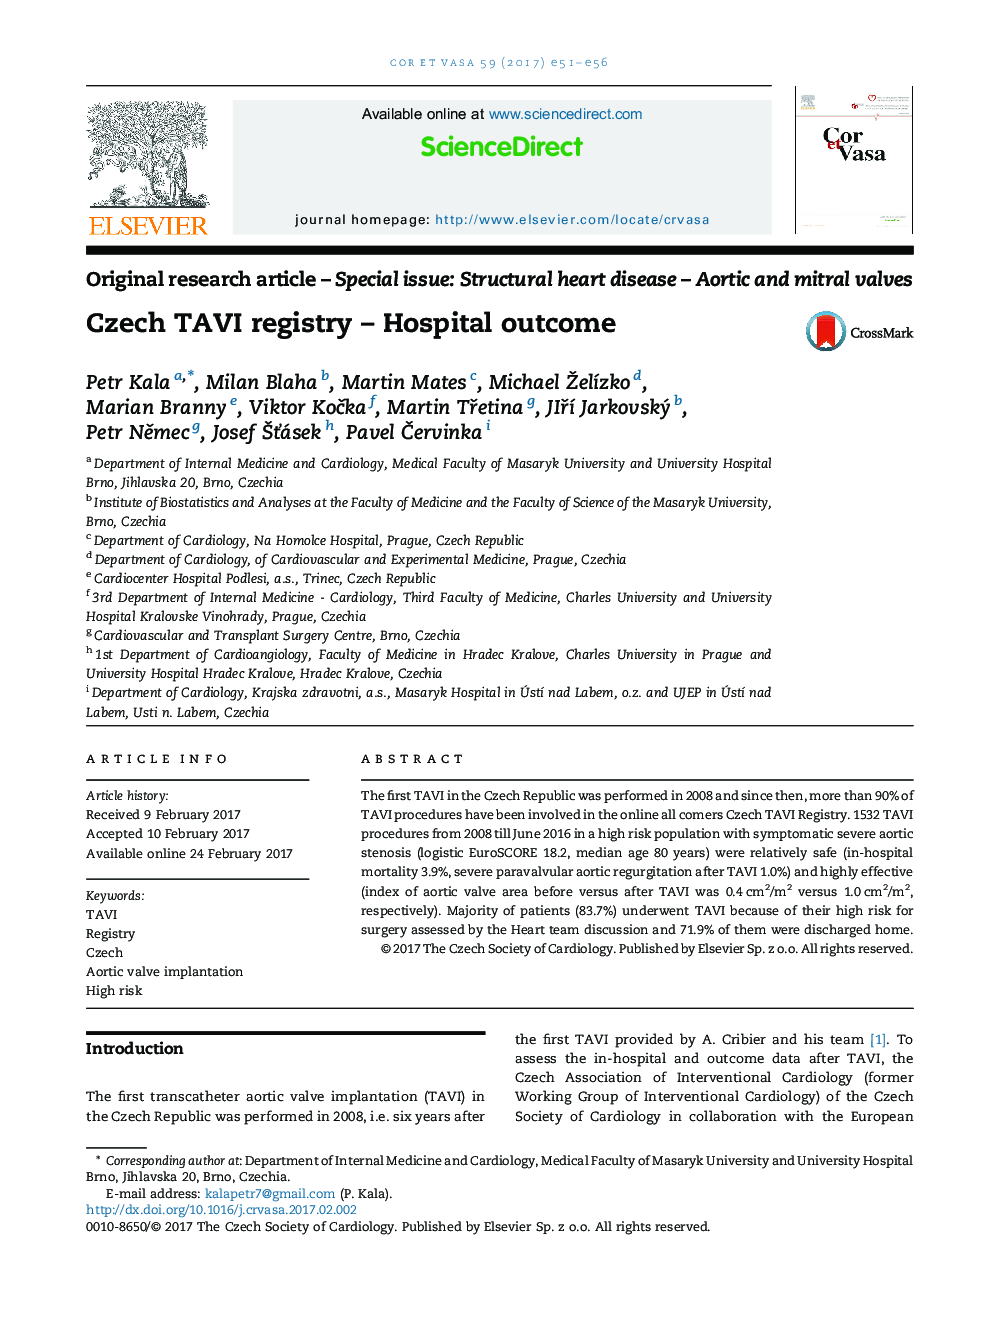 Czech TAVI registry - Hospital outcome